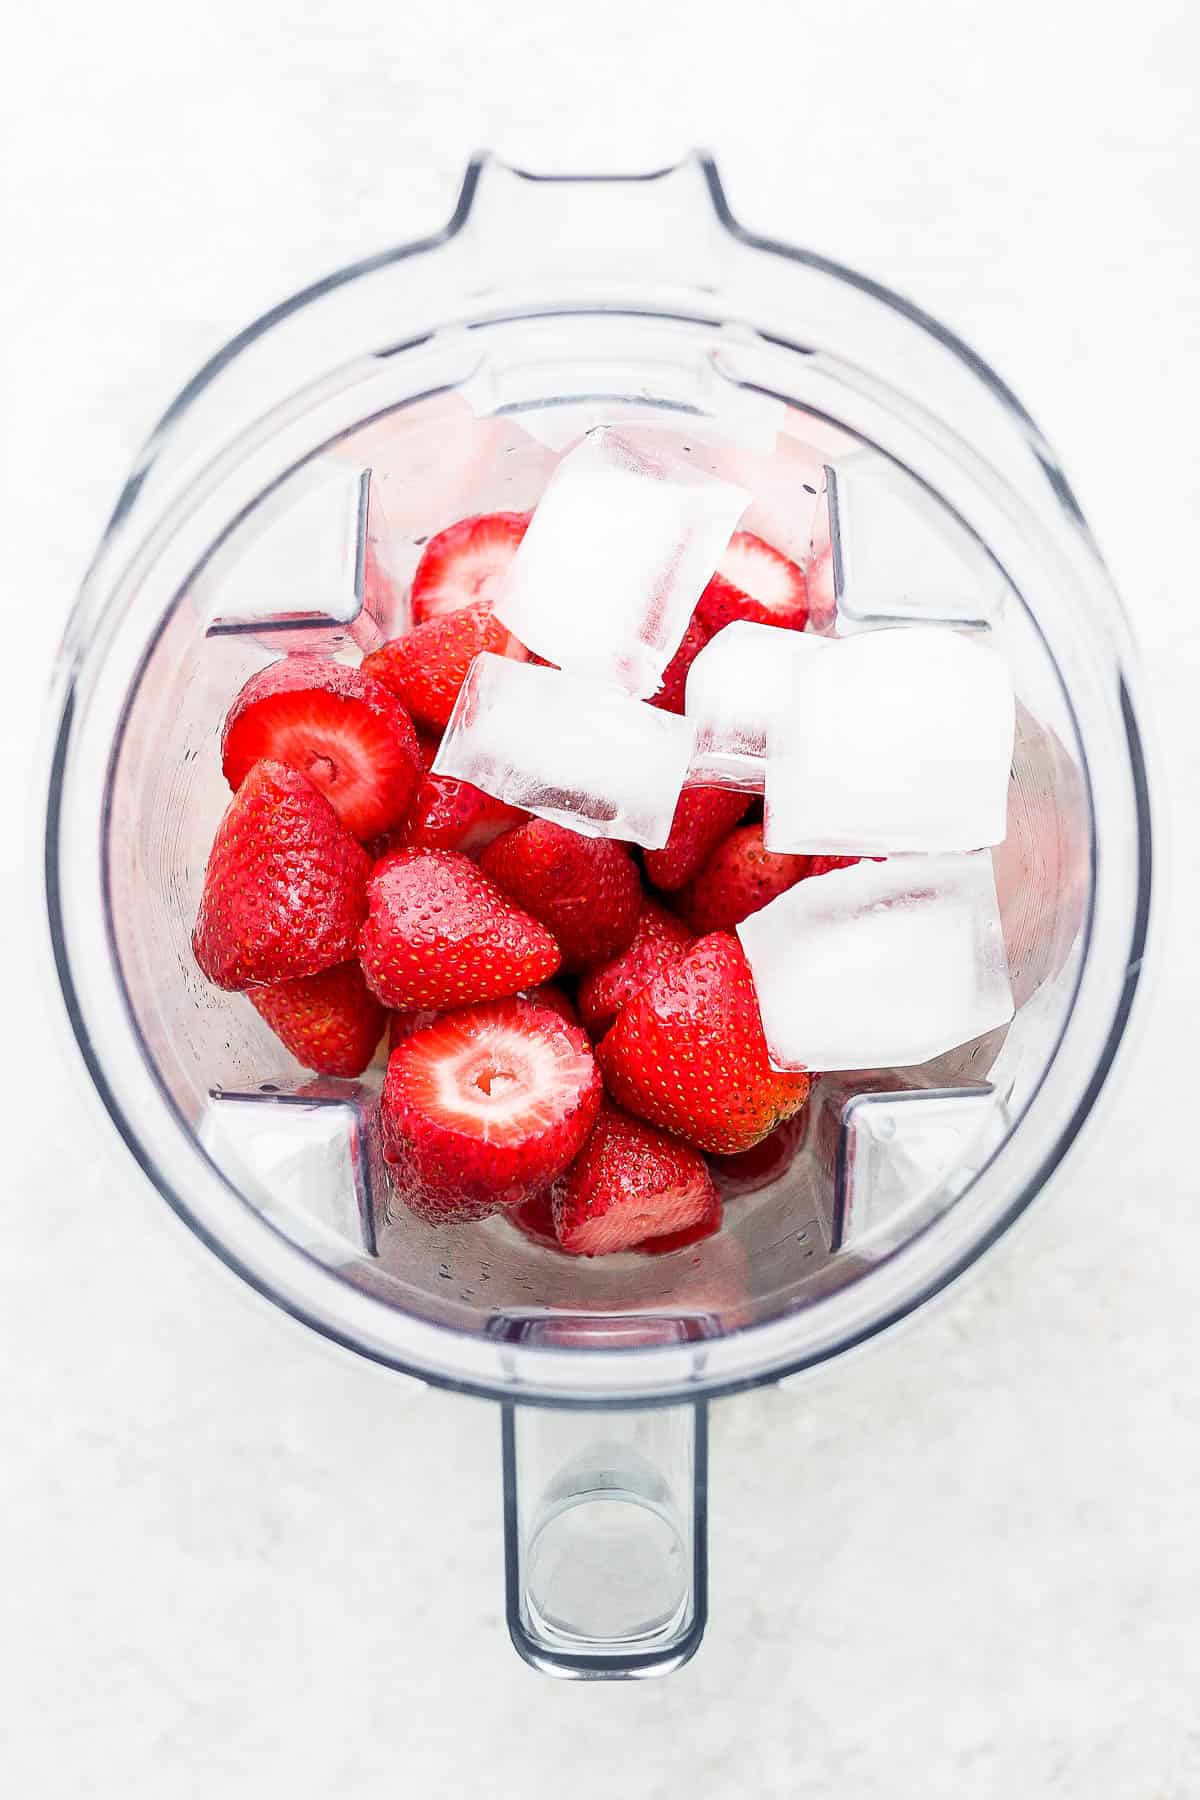 Strawberry margarita ingredients in a blender.